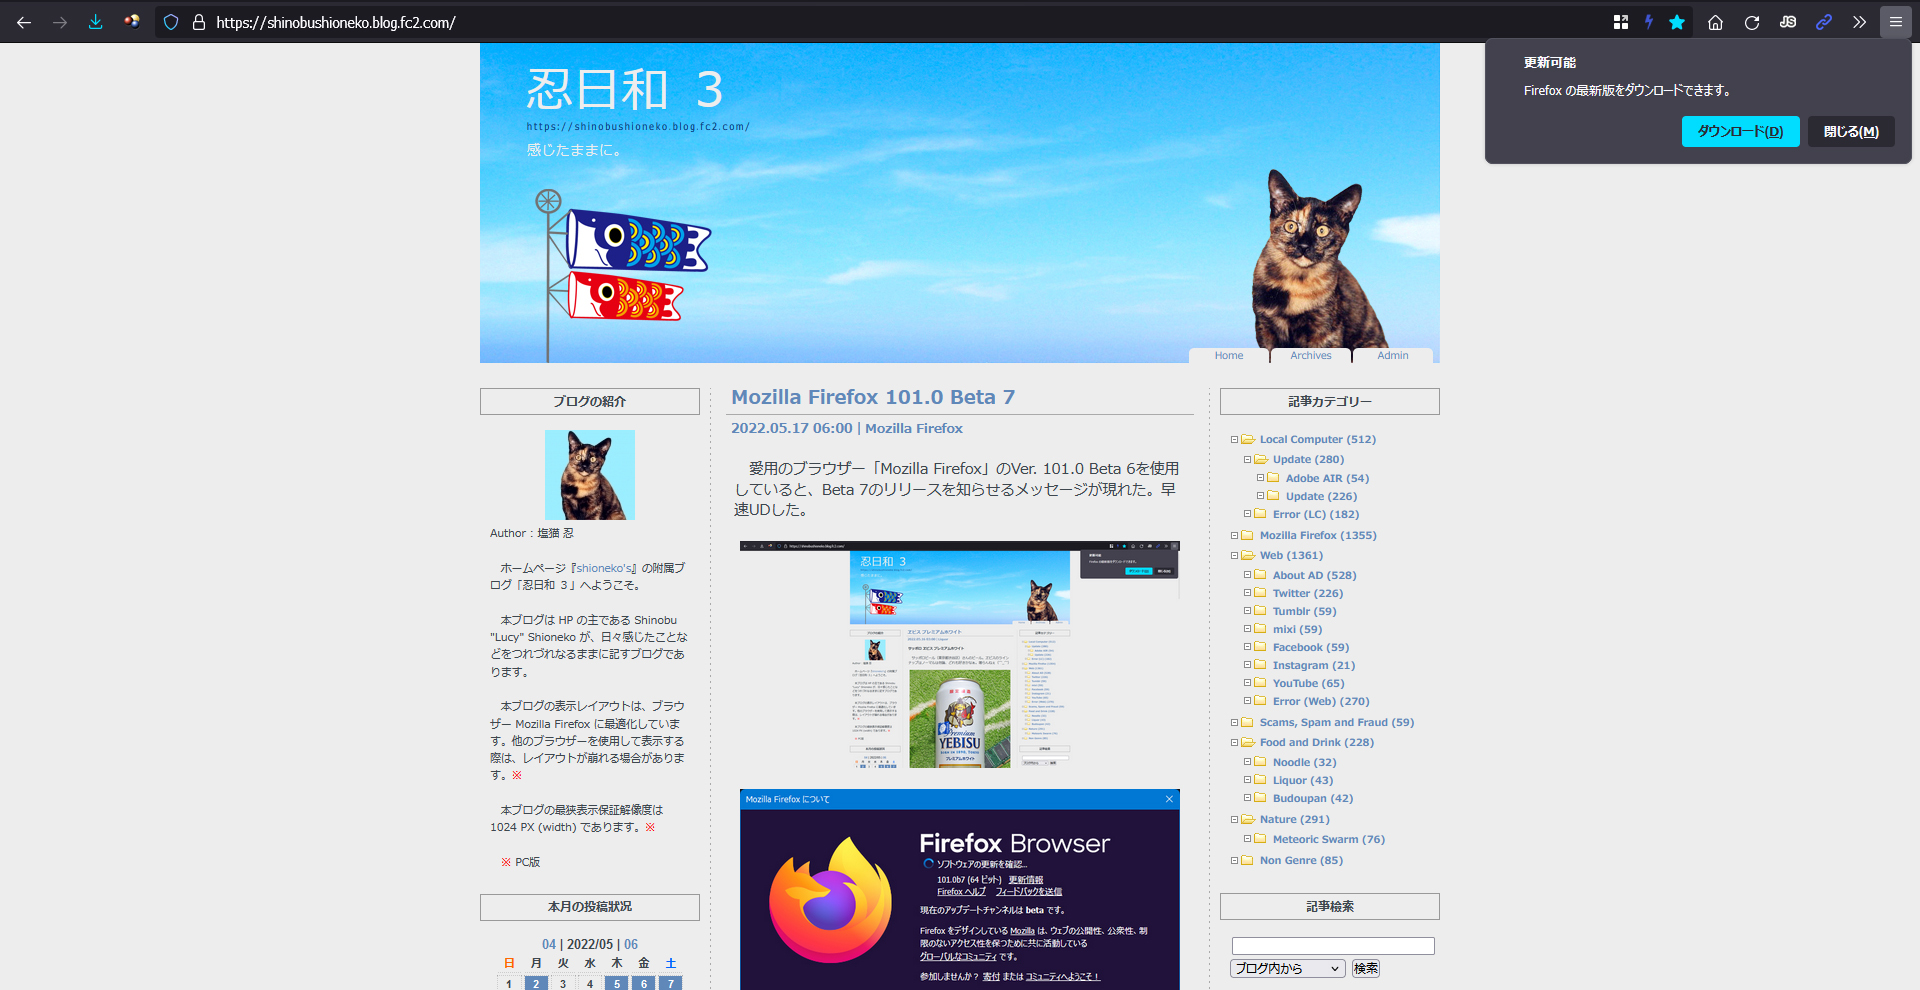 Mozilla Firefox 101.0 Beta 8